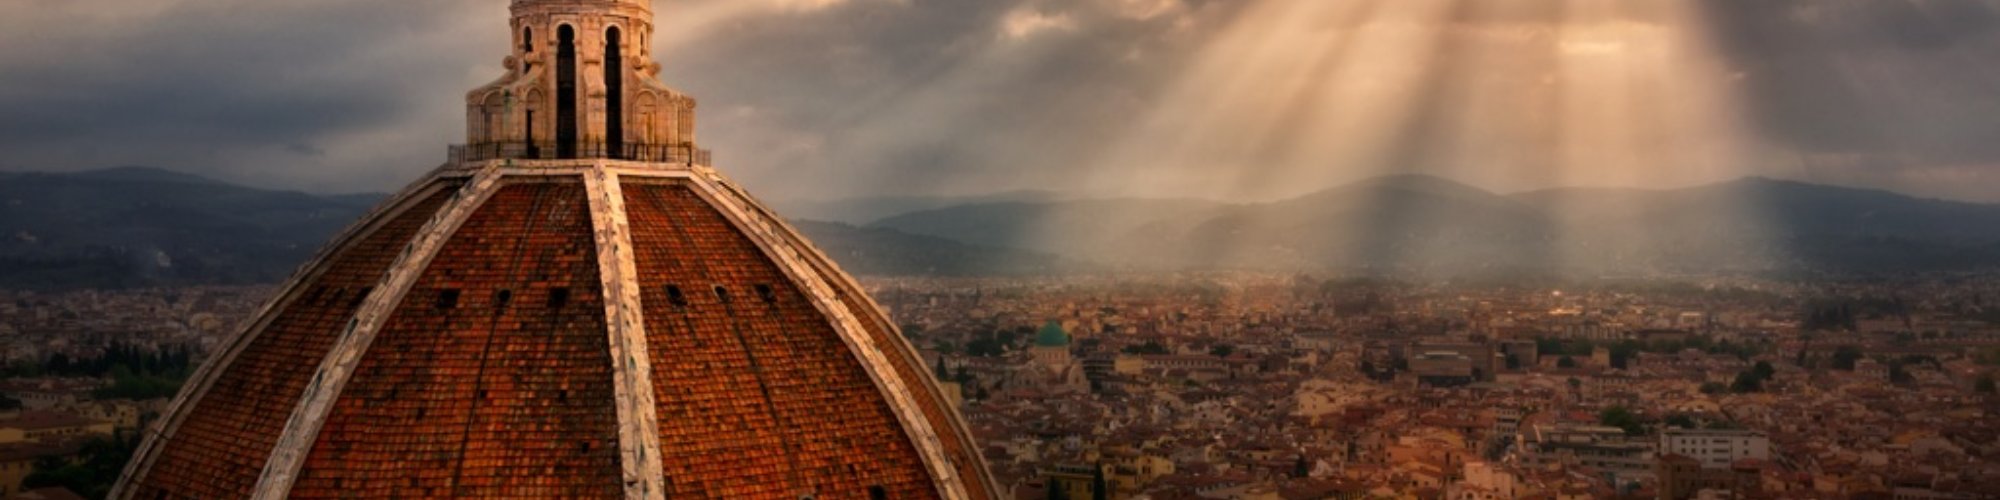 Florence Dome and skyline